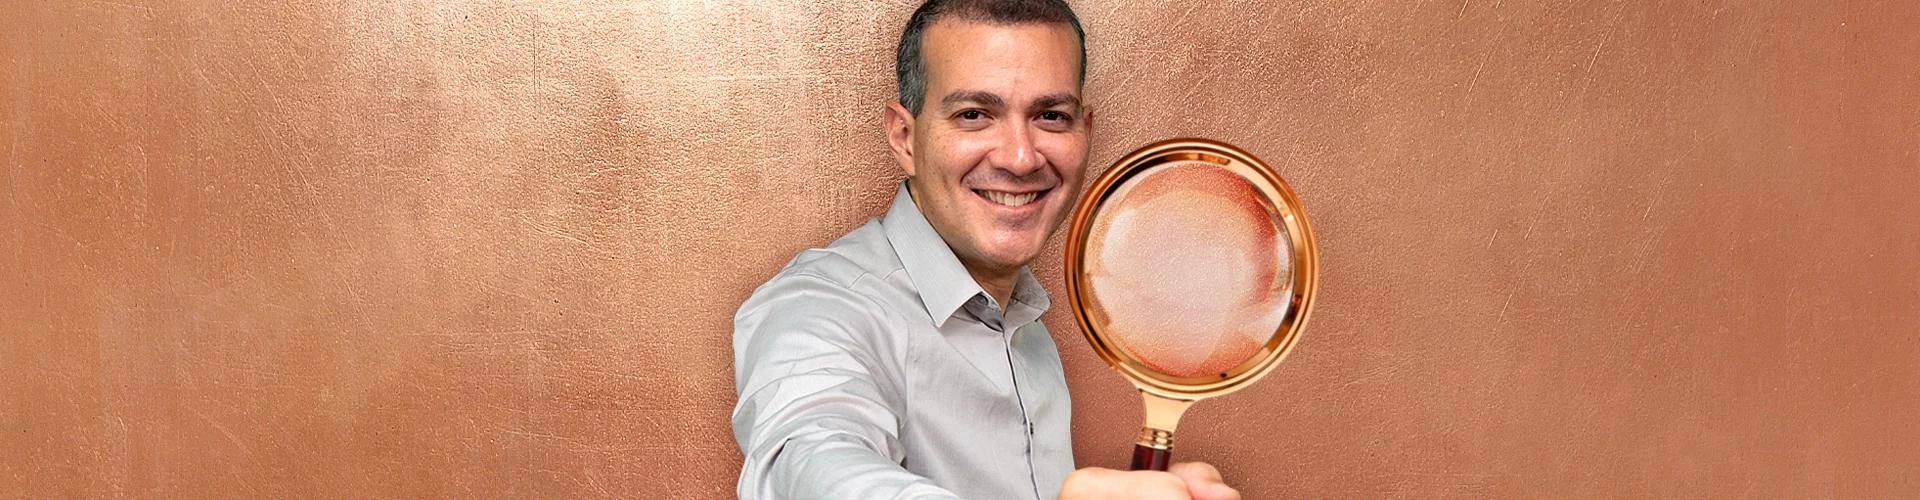 Blog Hero Danilo Prates - Copperleaf Decision Analytics